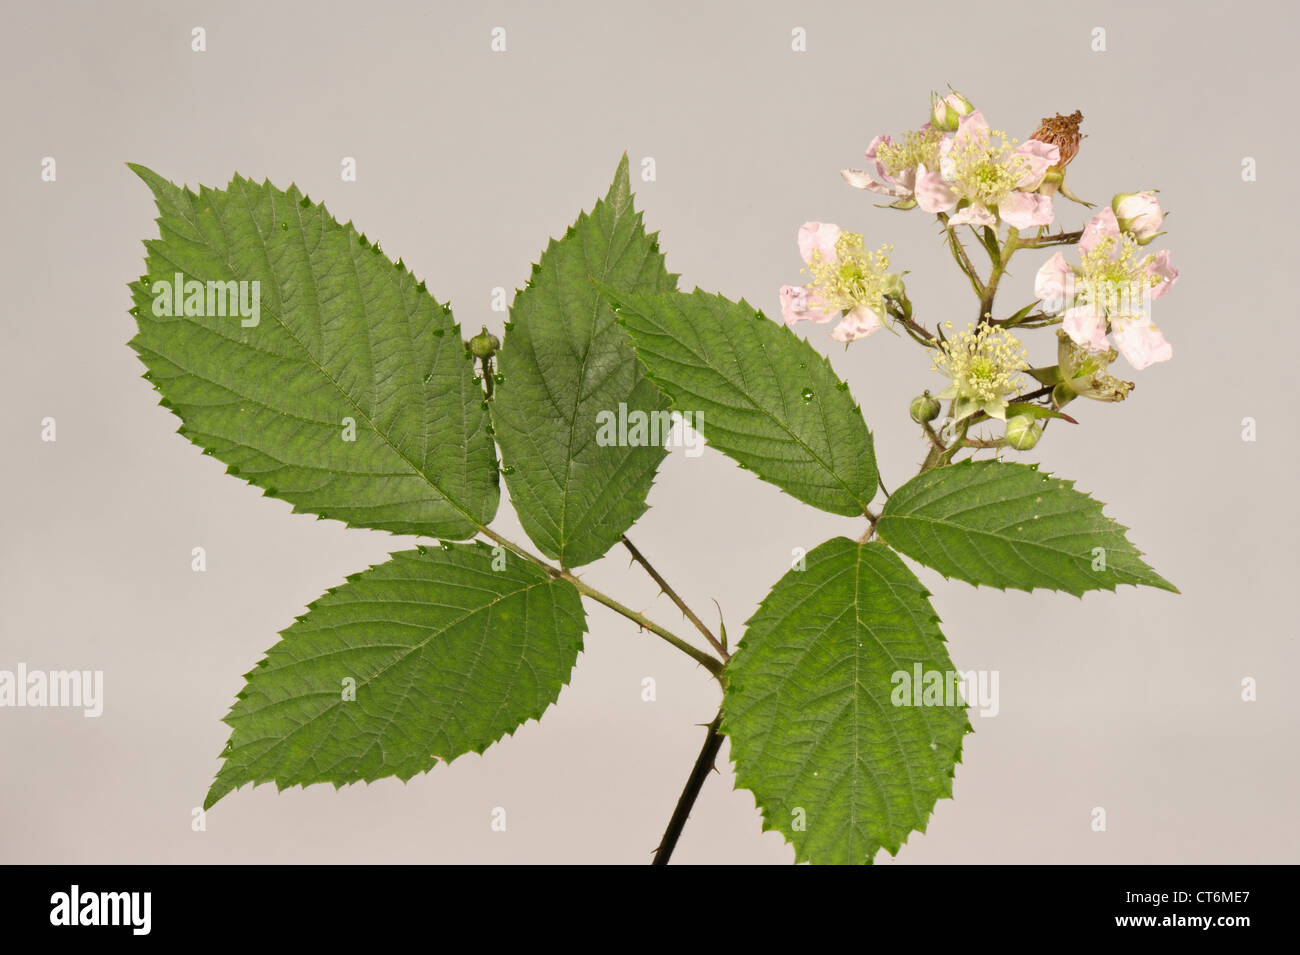 Blackberry or bramble Rubus fruticosus leaves and flowers Stock Photo